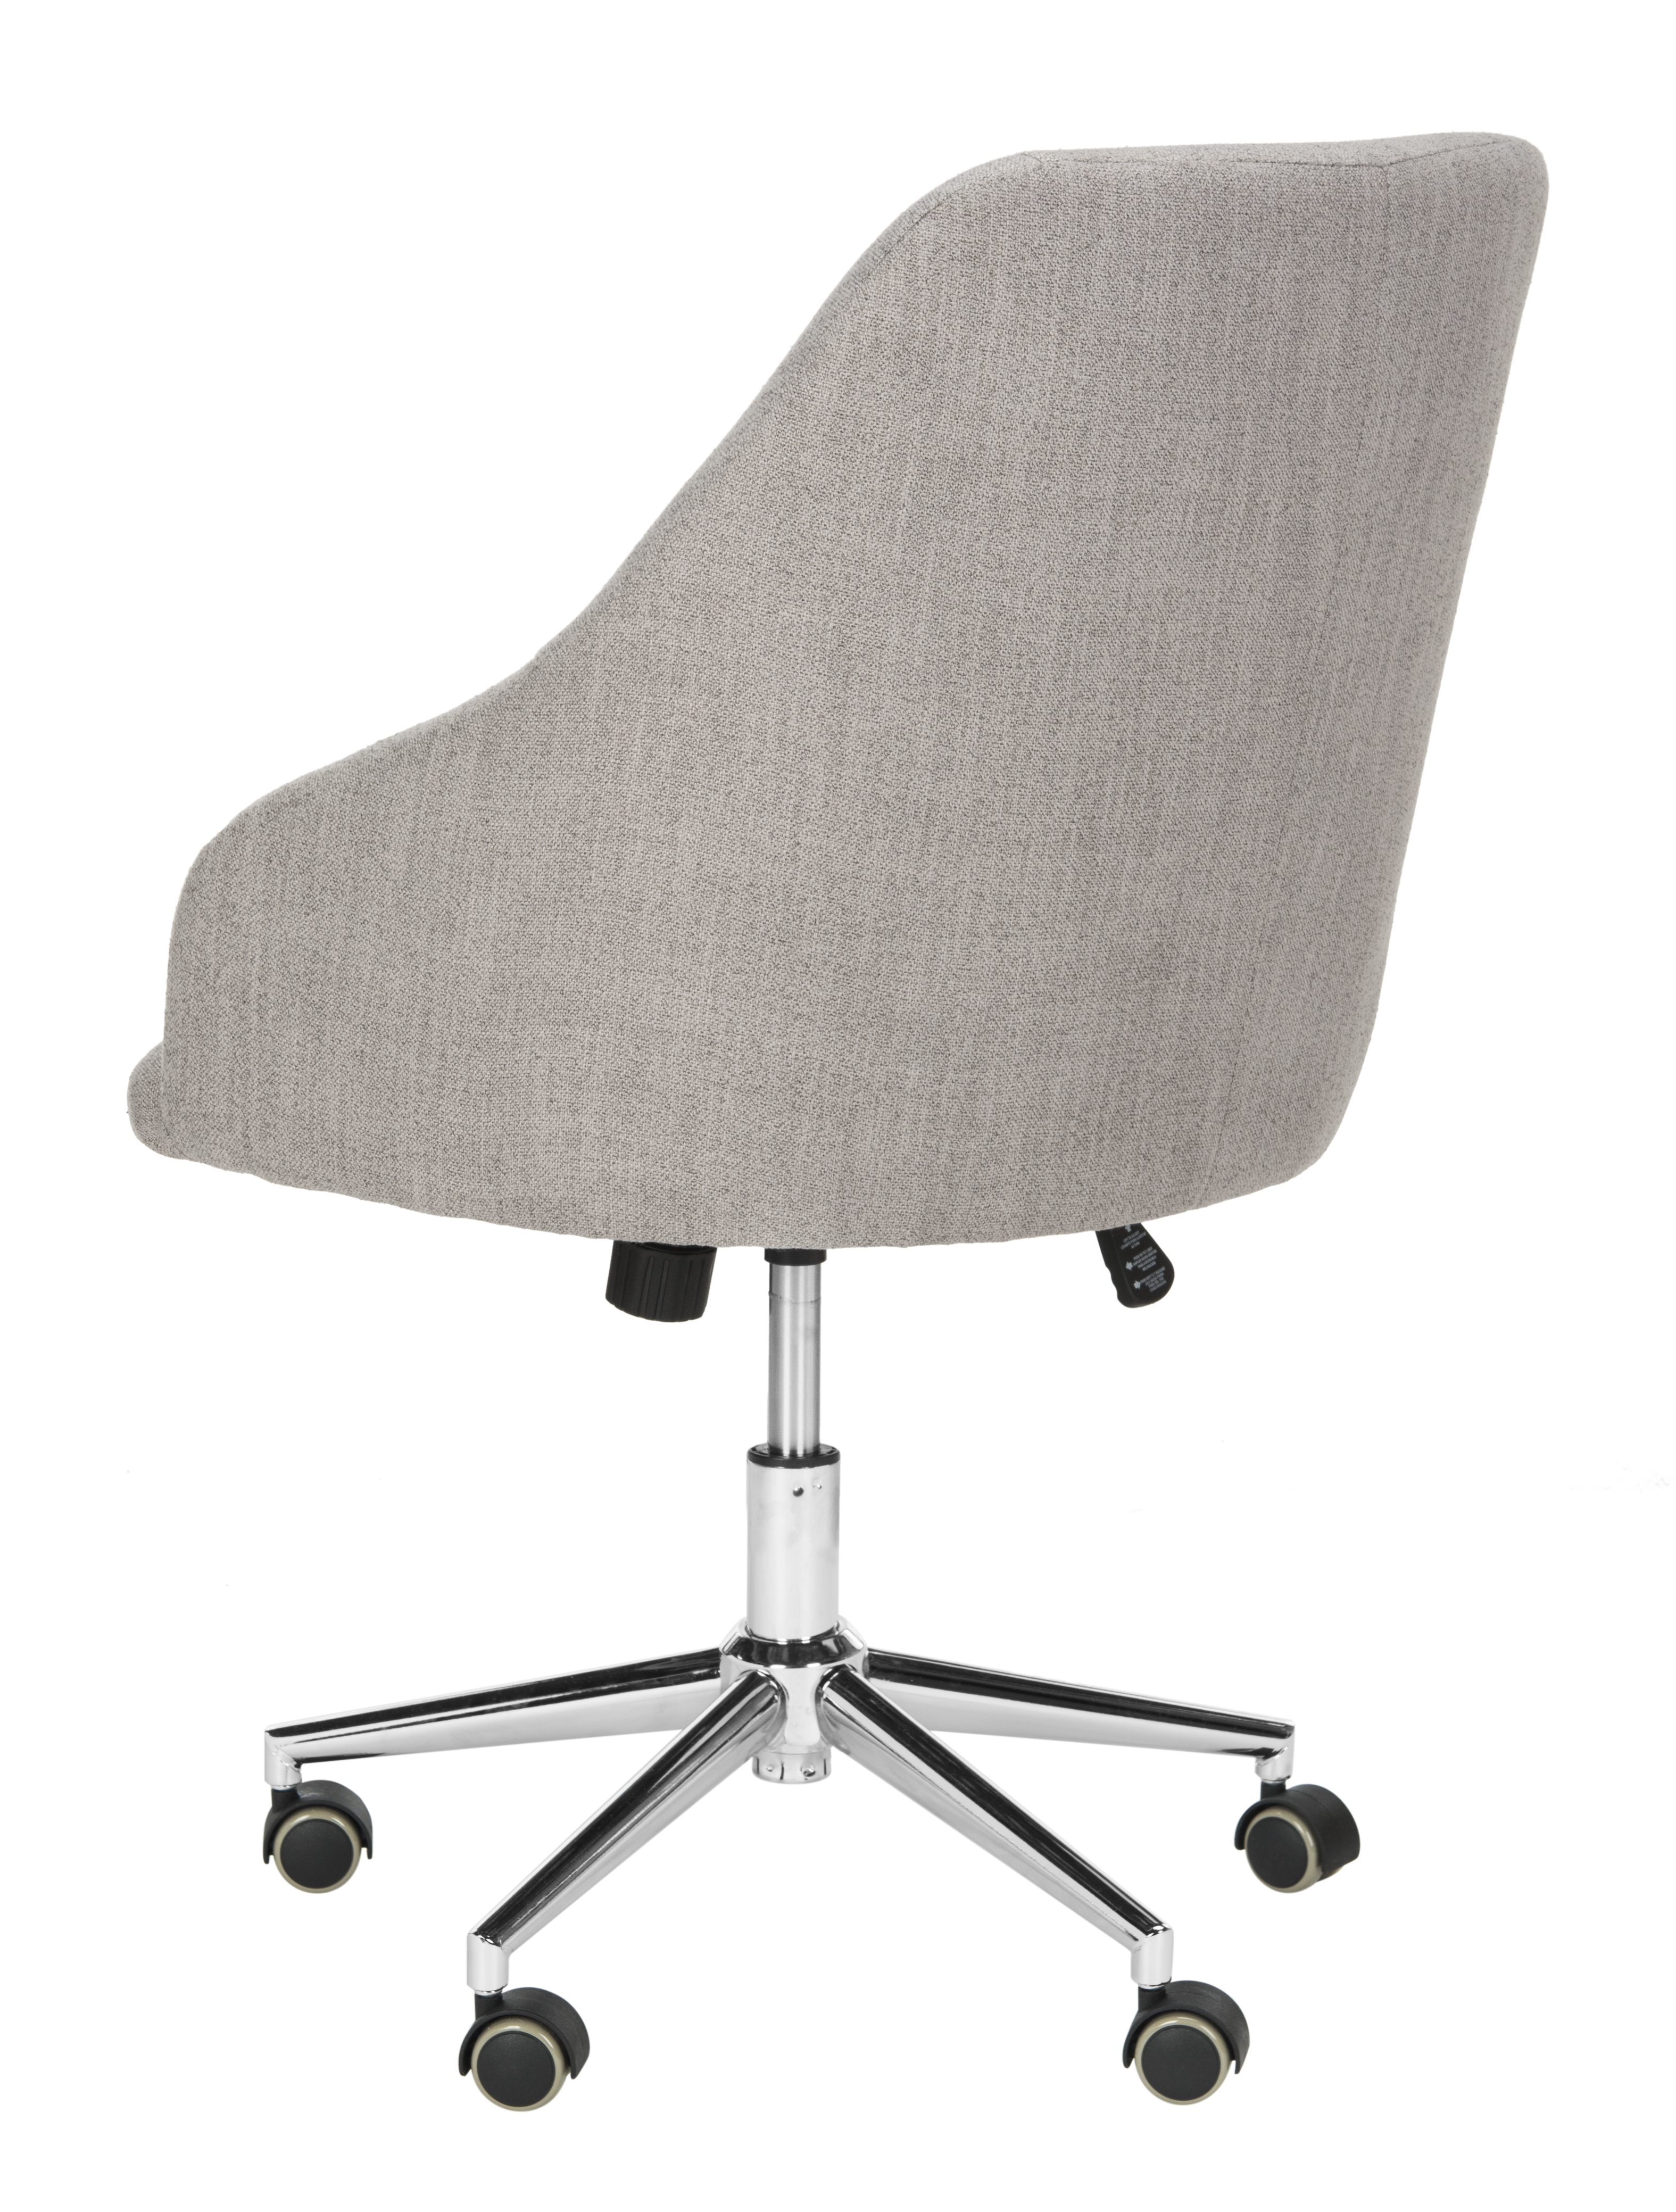 Adrienne Linen Chrome Leg Swivel Office Chair - Grey/Chrome - Arlo Home - Image 3